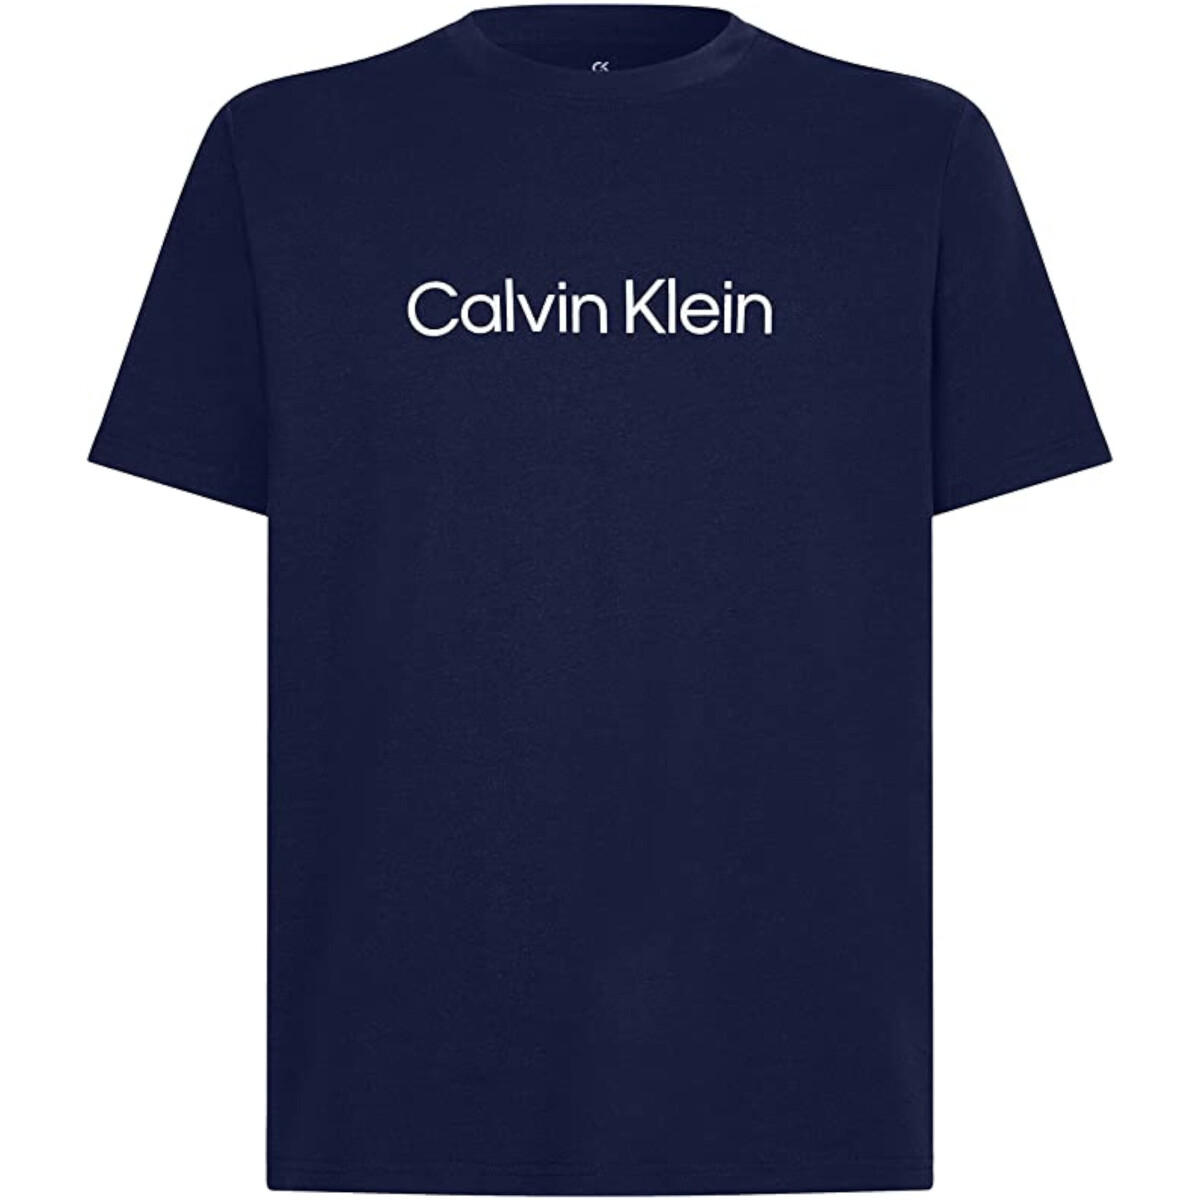 textil Hombre Camisetas manga corta Calvin Klein Jeans 00GMS2K107 Azul